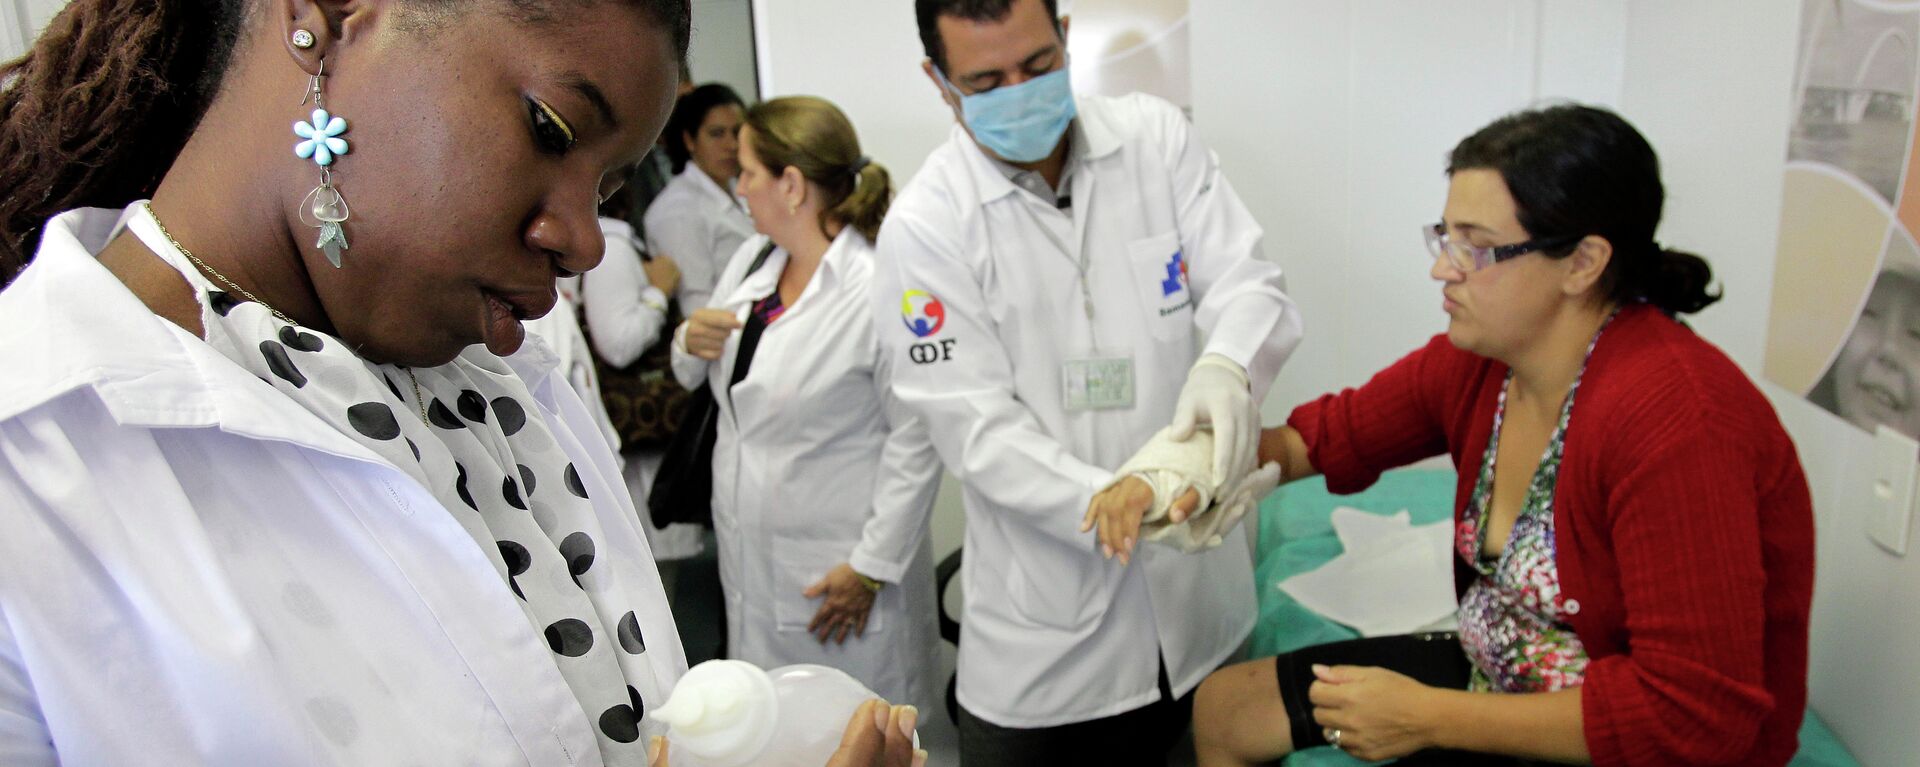 Dr. Yocelin Macias of Cuban, reads a label, during a training session at a health clinic in Brasilia, Brazil, Friday, Aug. 30, 2013 - Sputnik Mundo, 1920, 26.07.2021